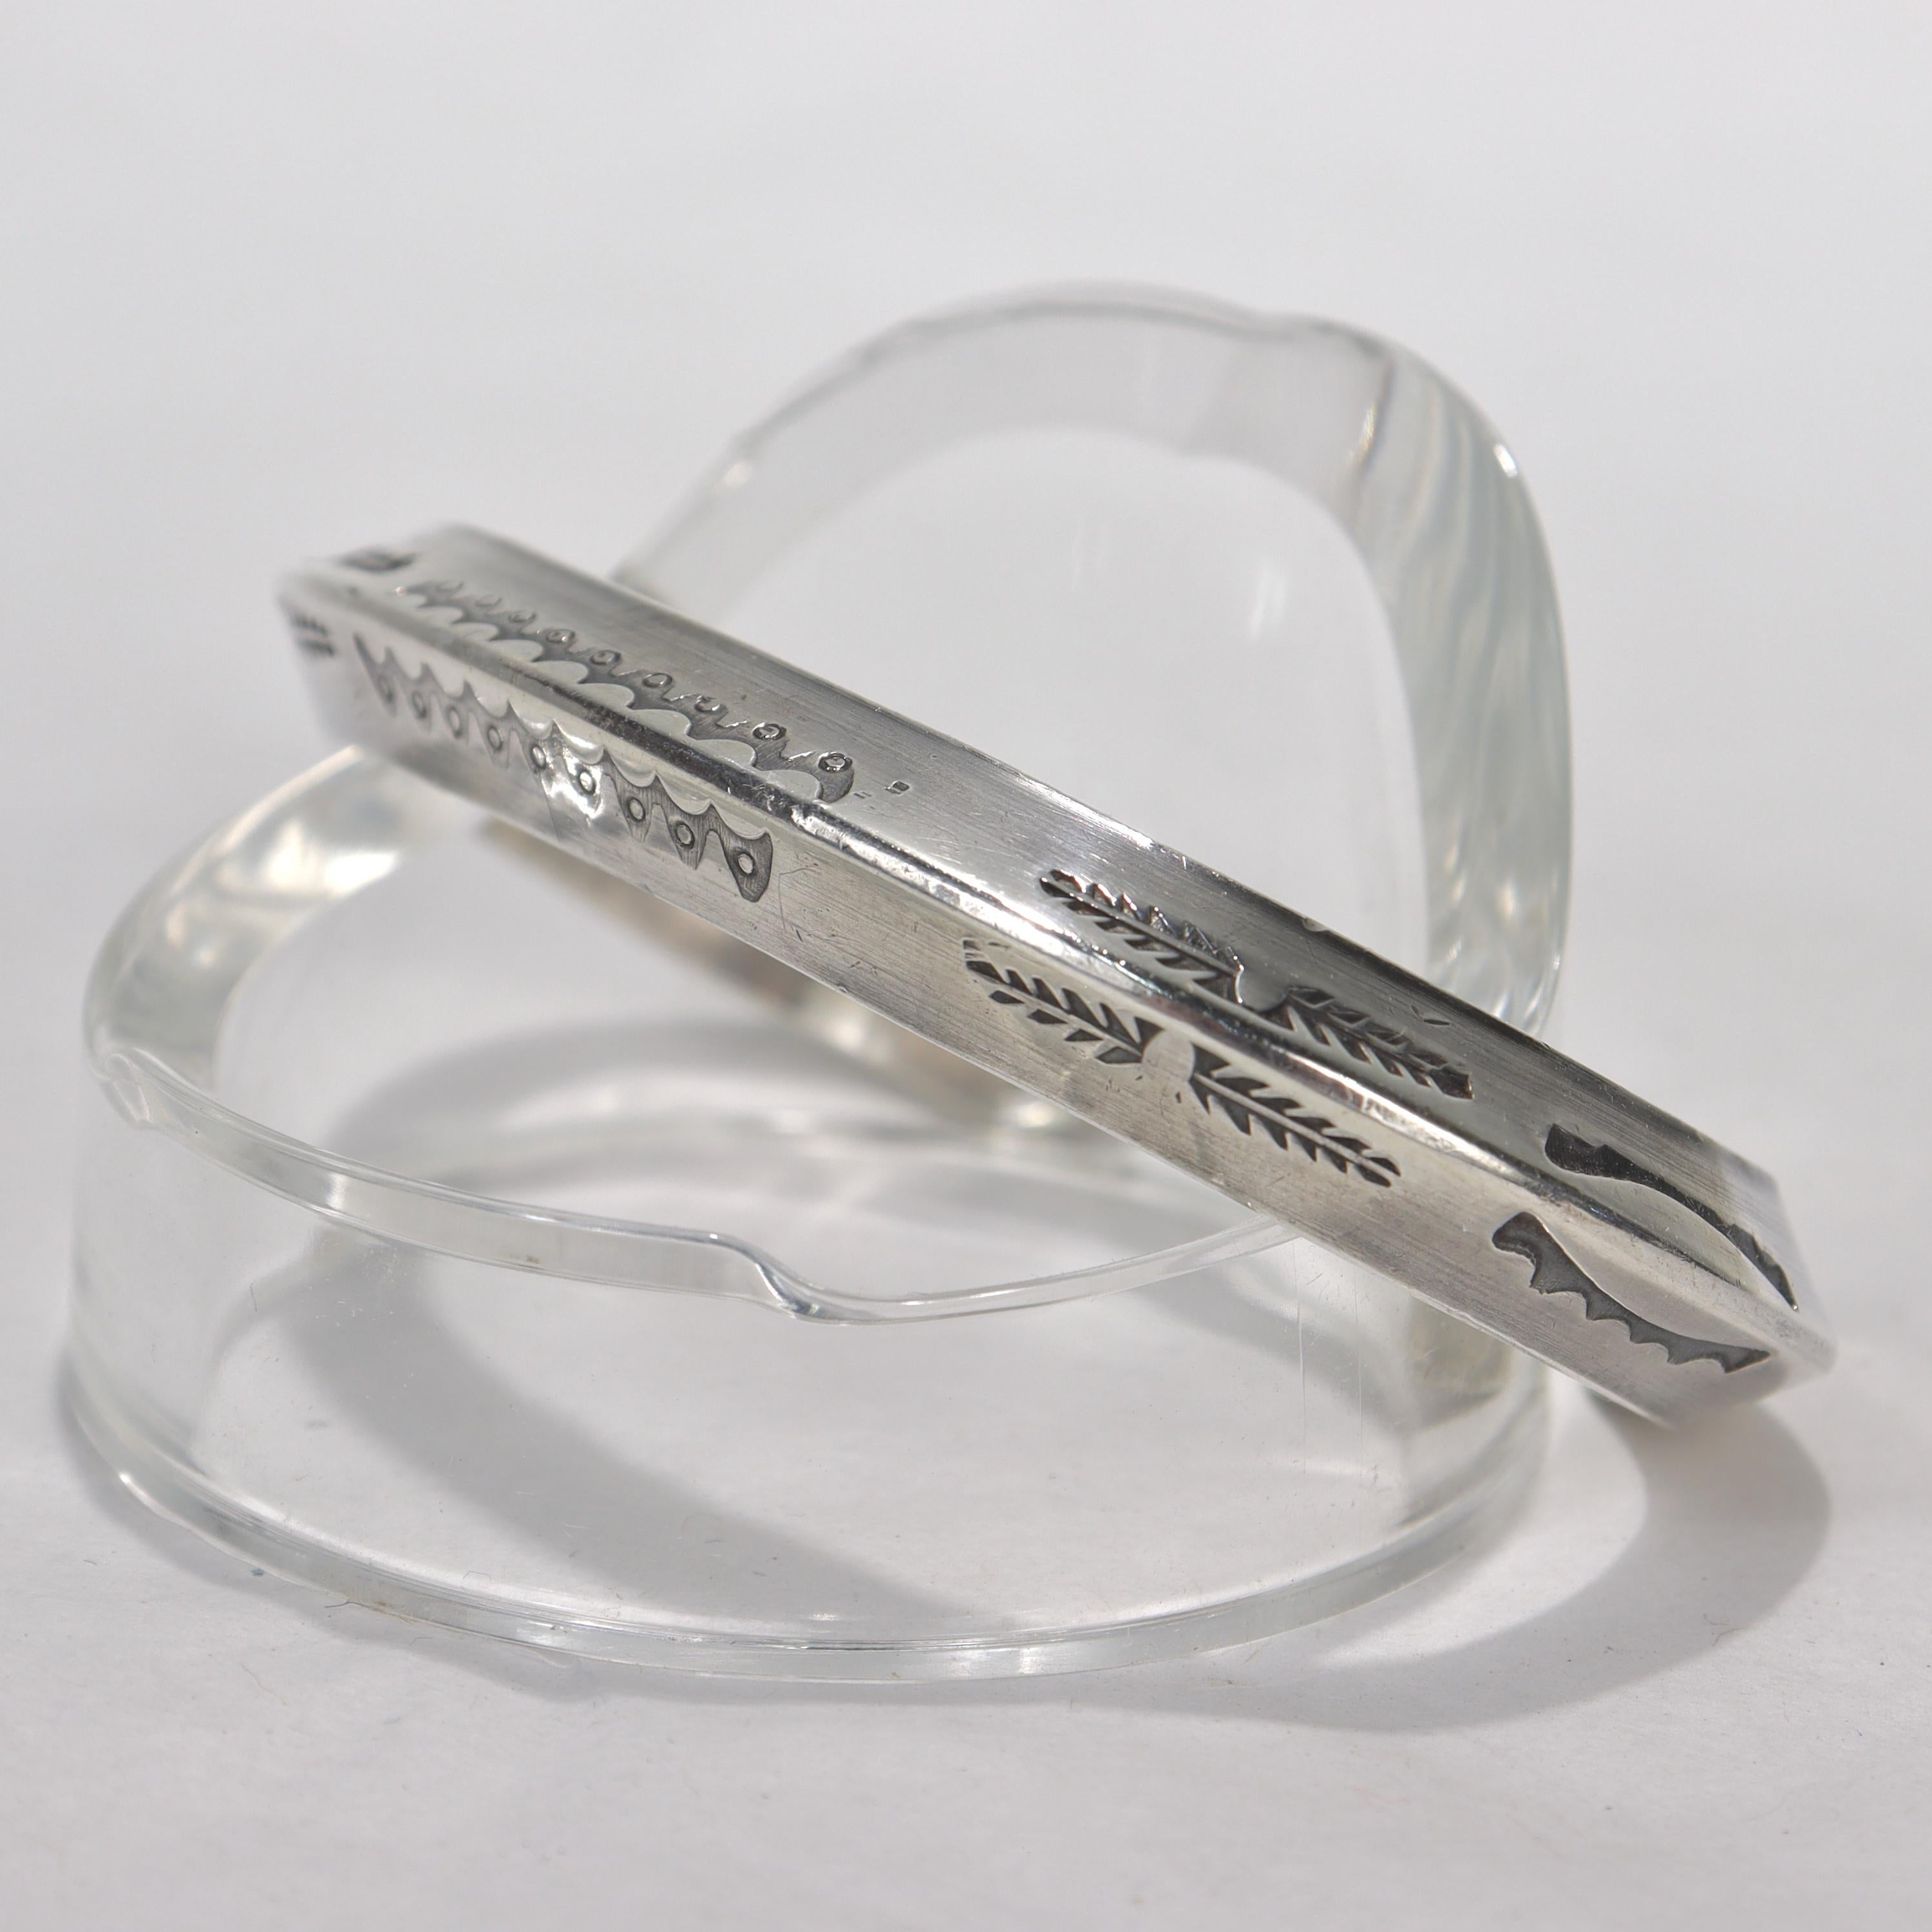 Native American Vintage Old Pawn Southwestern Navajo Silver Cuff Bracelet For Sale